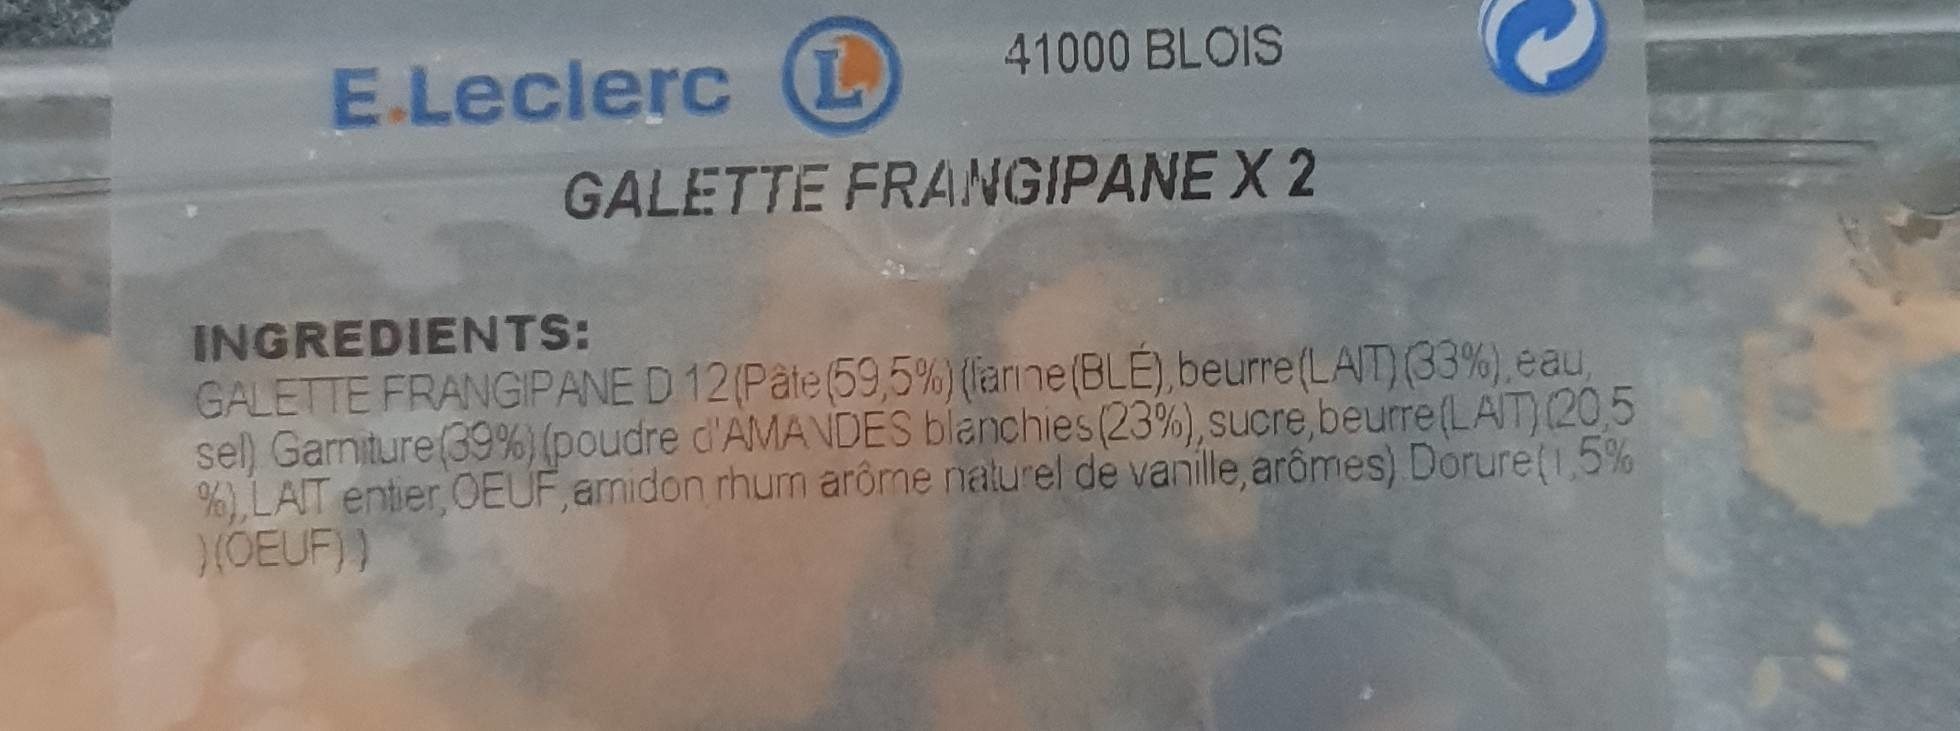 Galette frangipane ×2 - Ingredients - fr